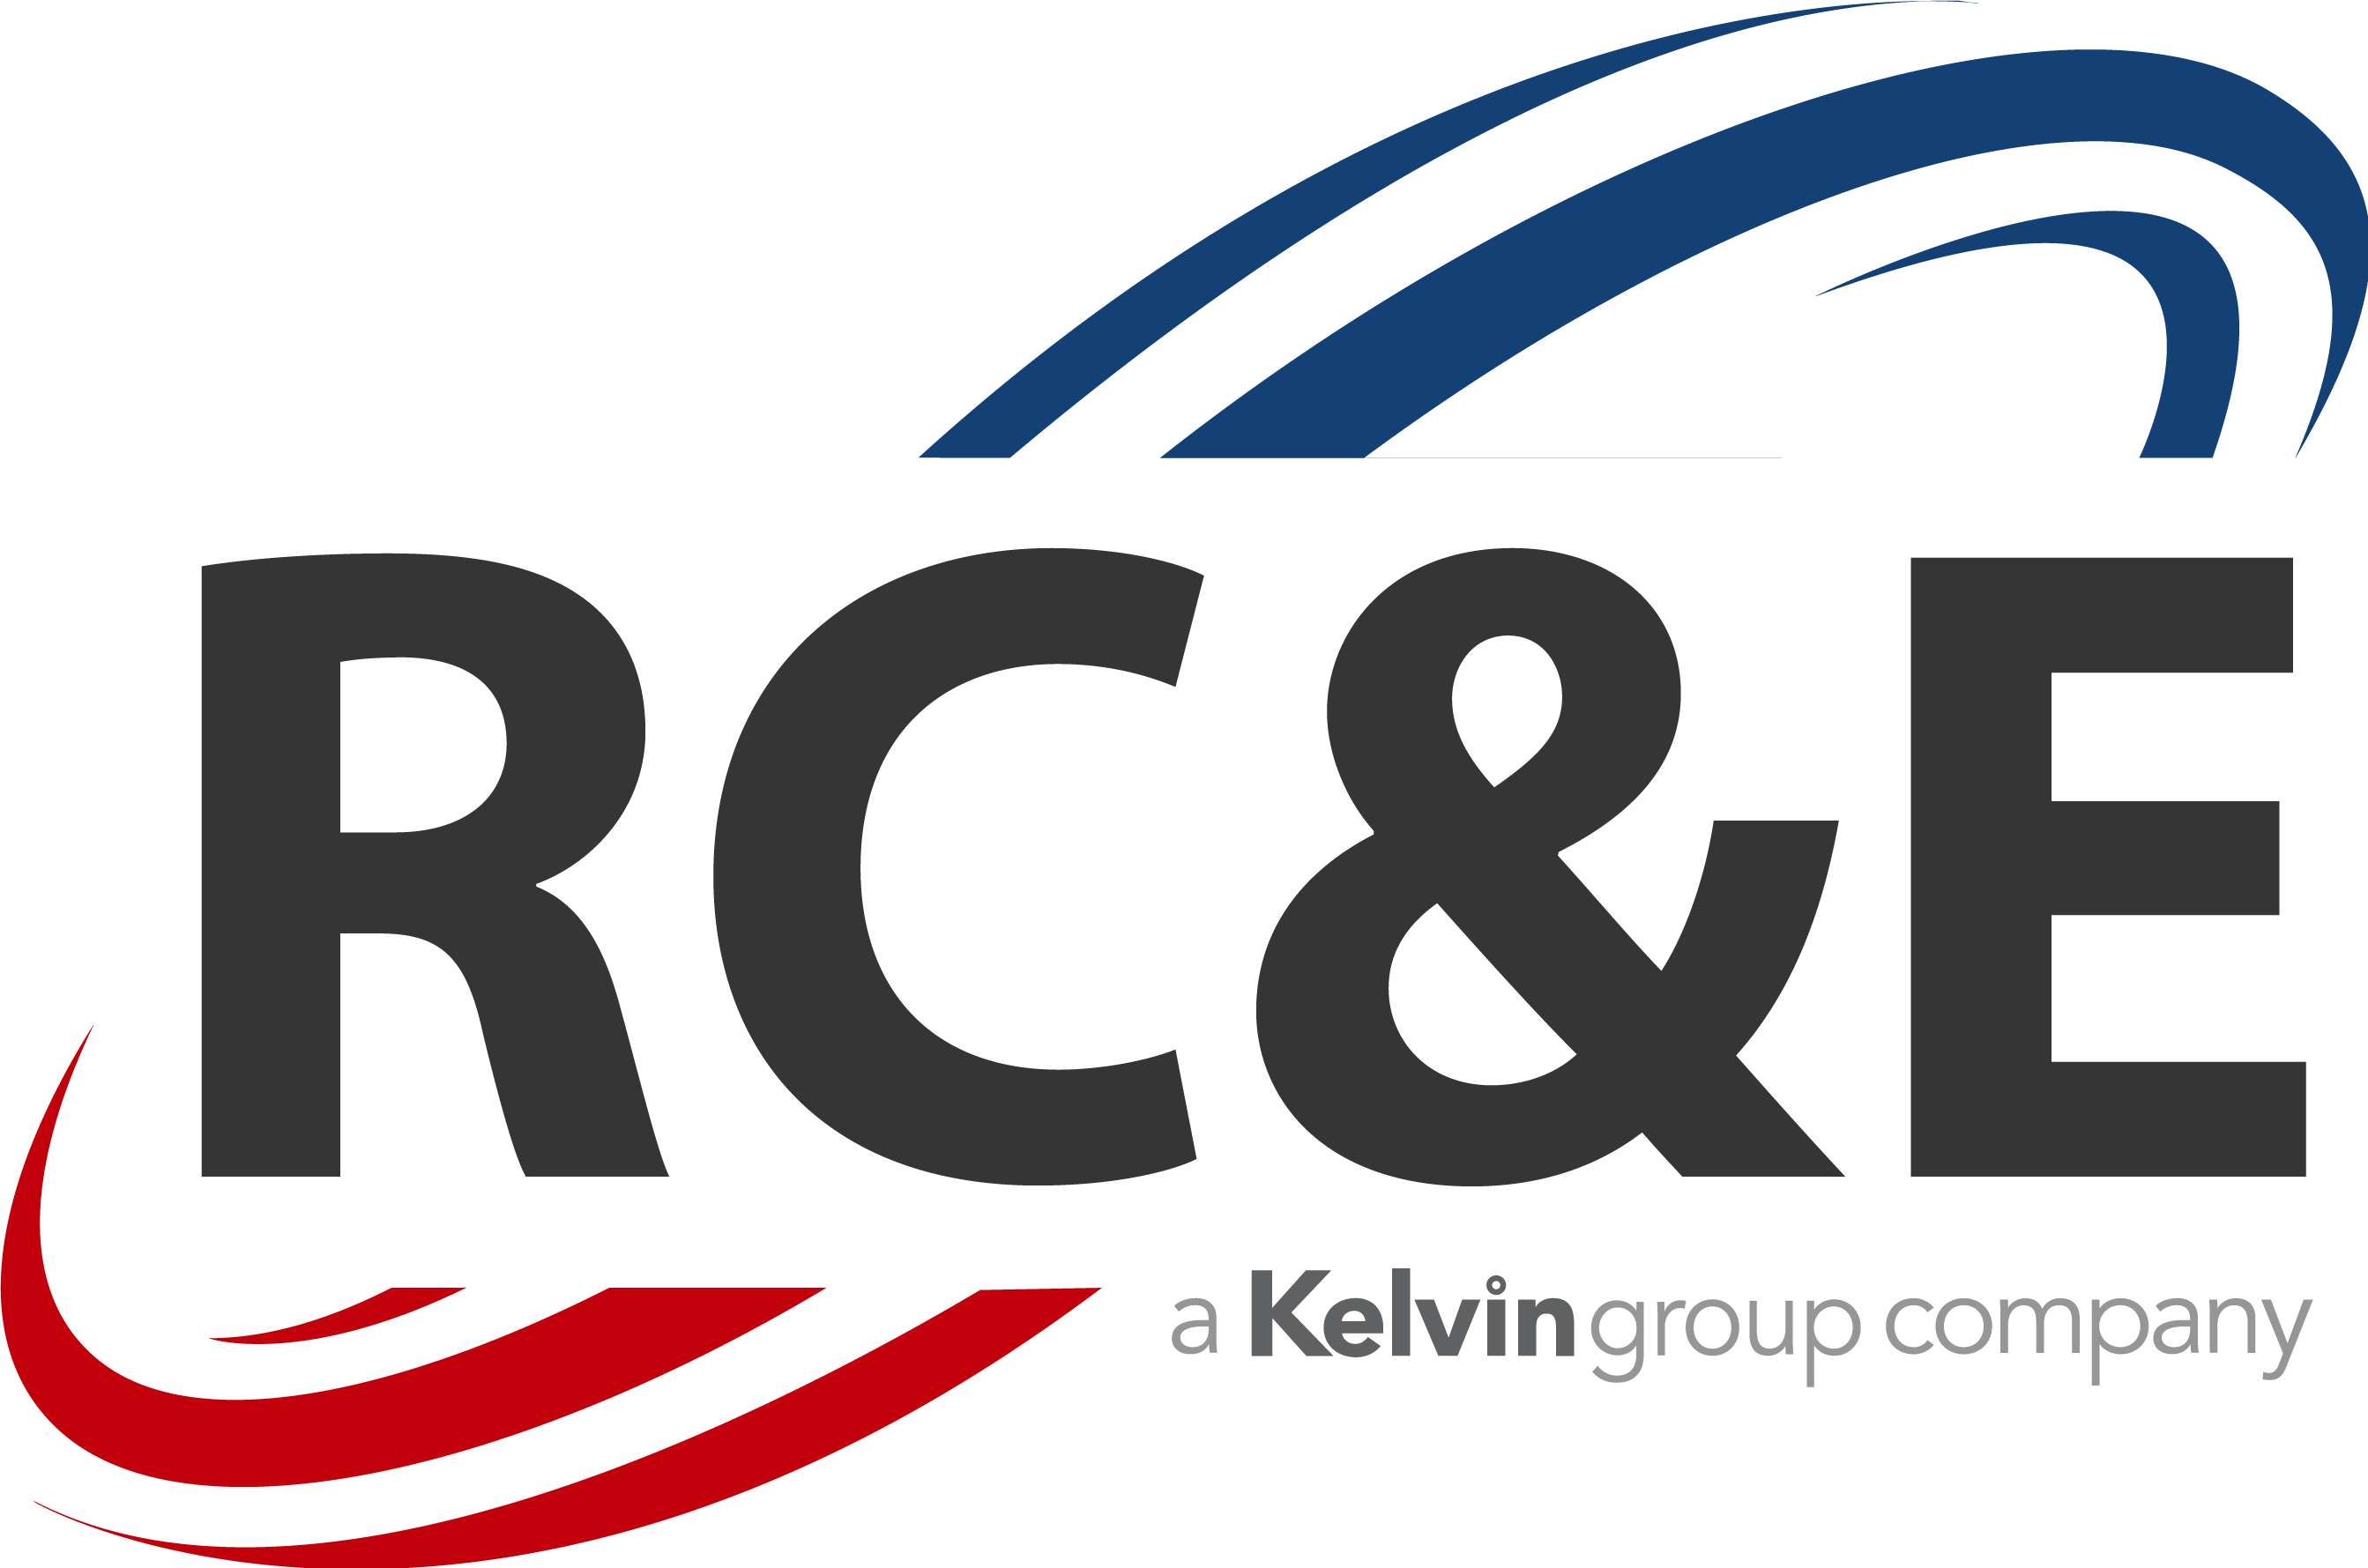 RC&E a Kelvin Group company